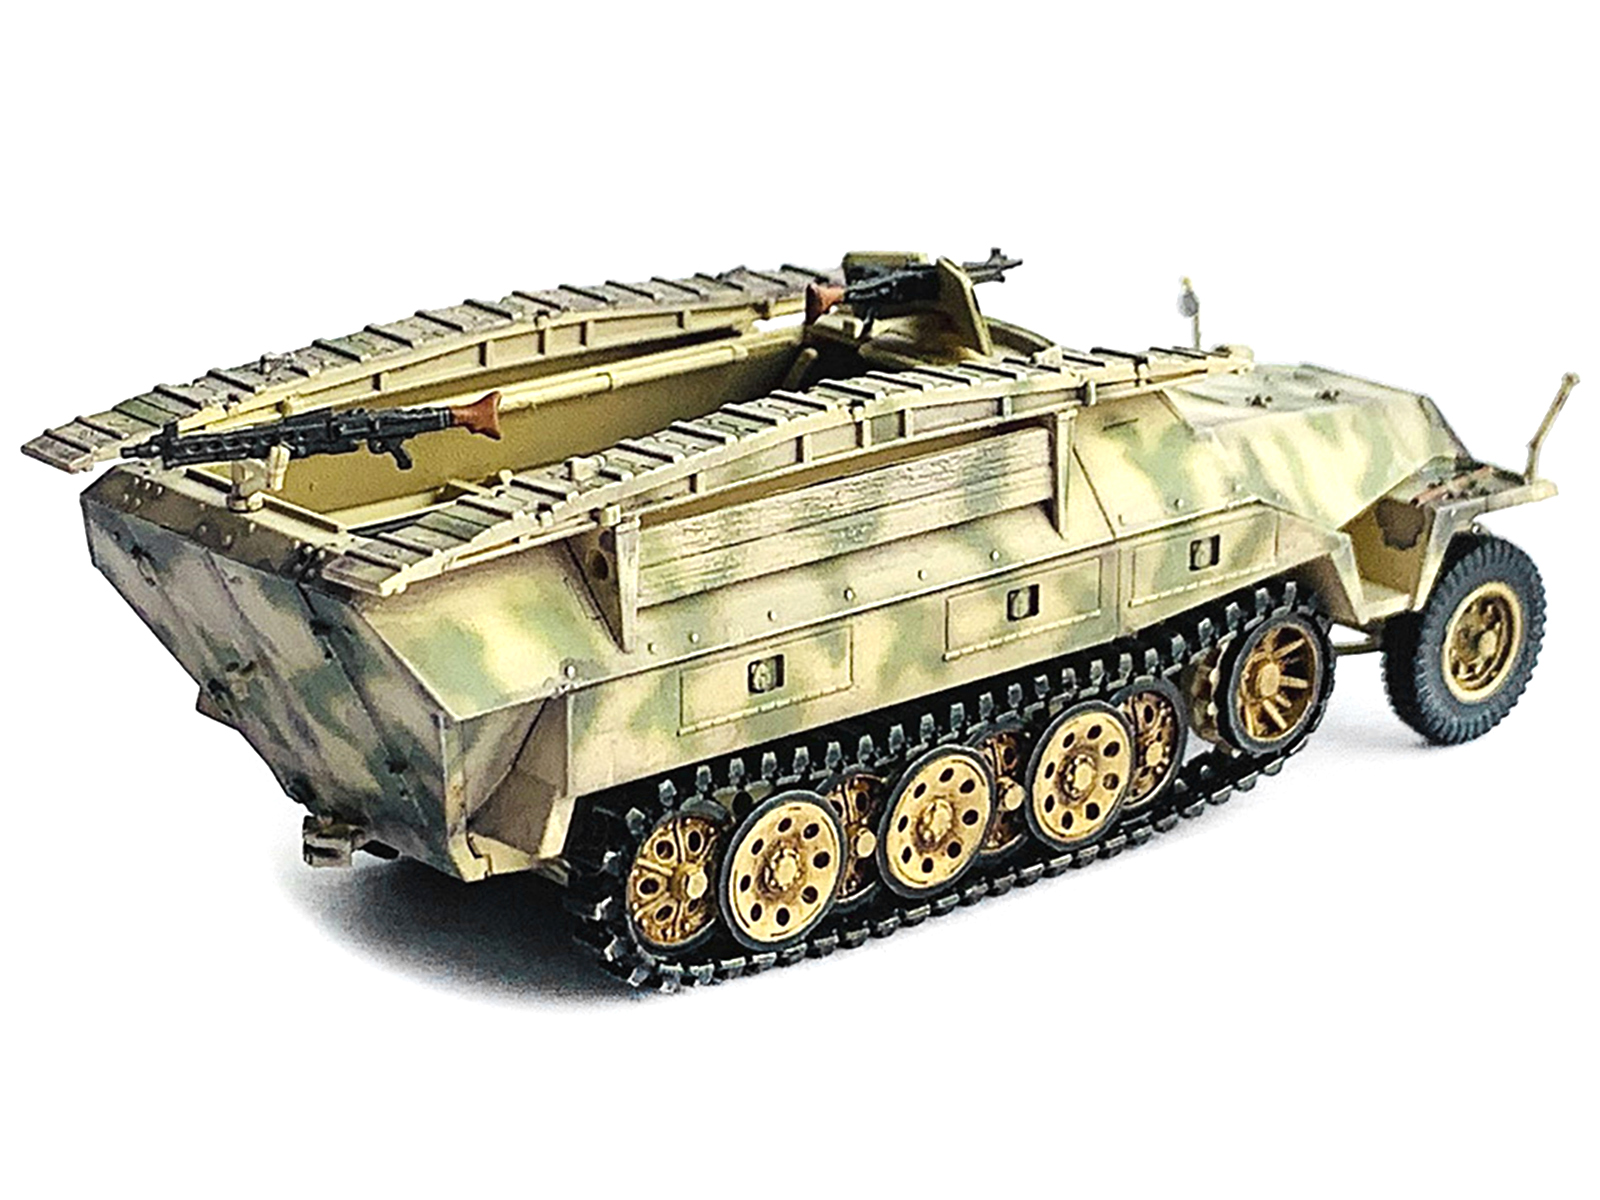 Dragon Models German Sd.Kfz. 251/7 Ausf.D Pionierpanzerwagen Armored Vehicle "NEO Dragon Armor" Series 1/72 Plastic Model by Dragon Models